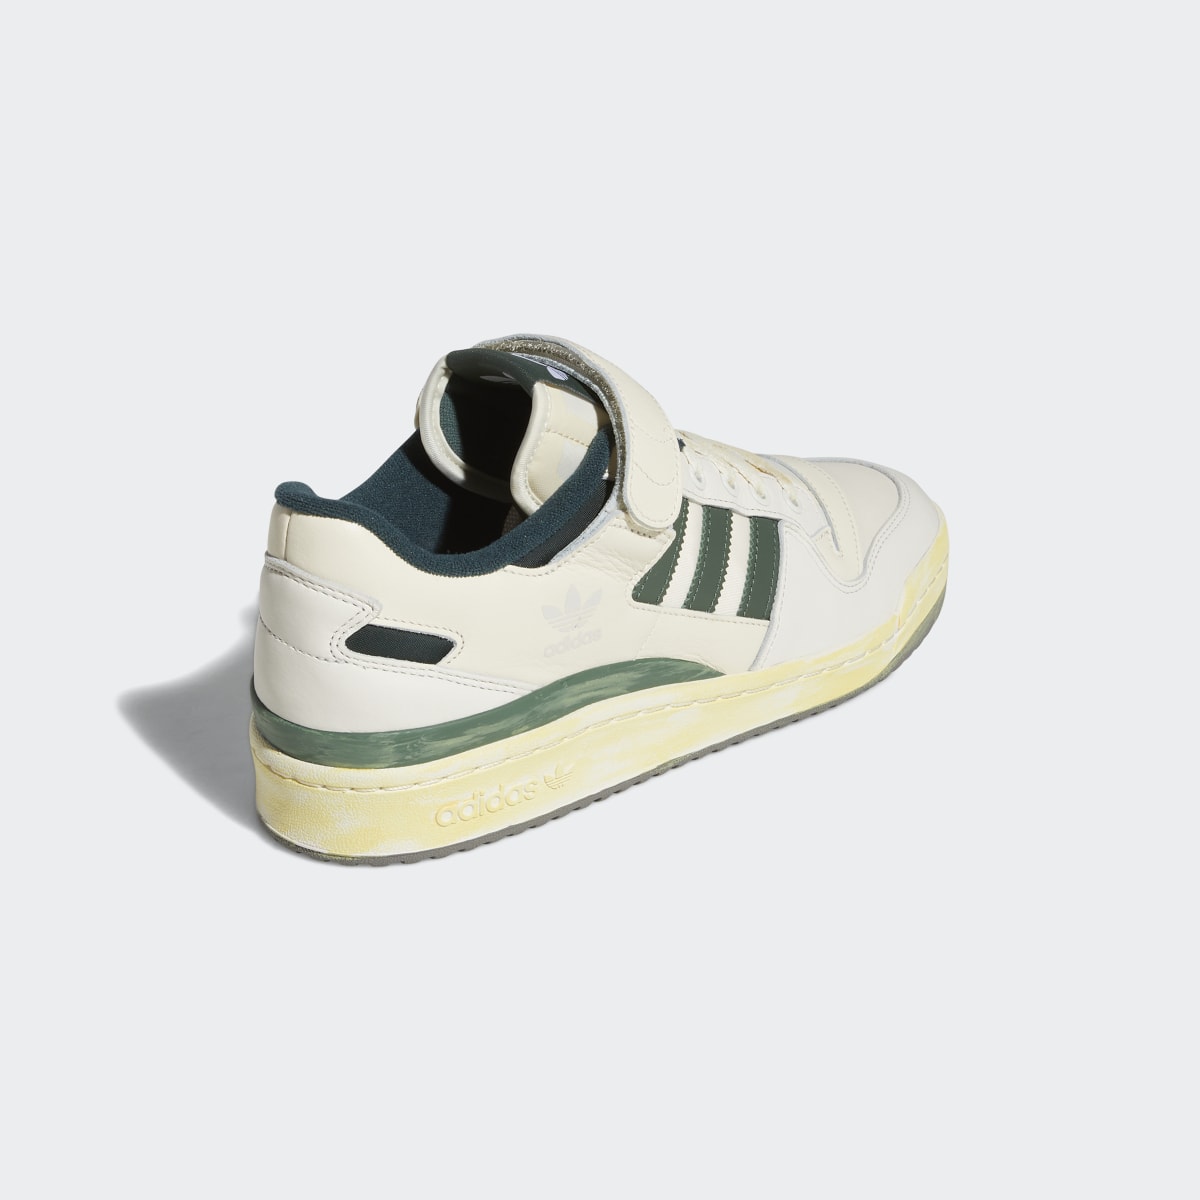 Adidas Forum 84 Low AEC Shoes. 6